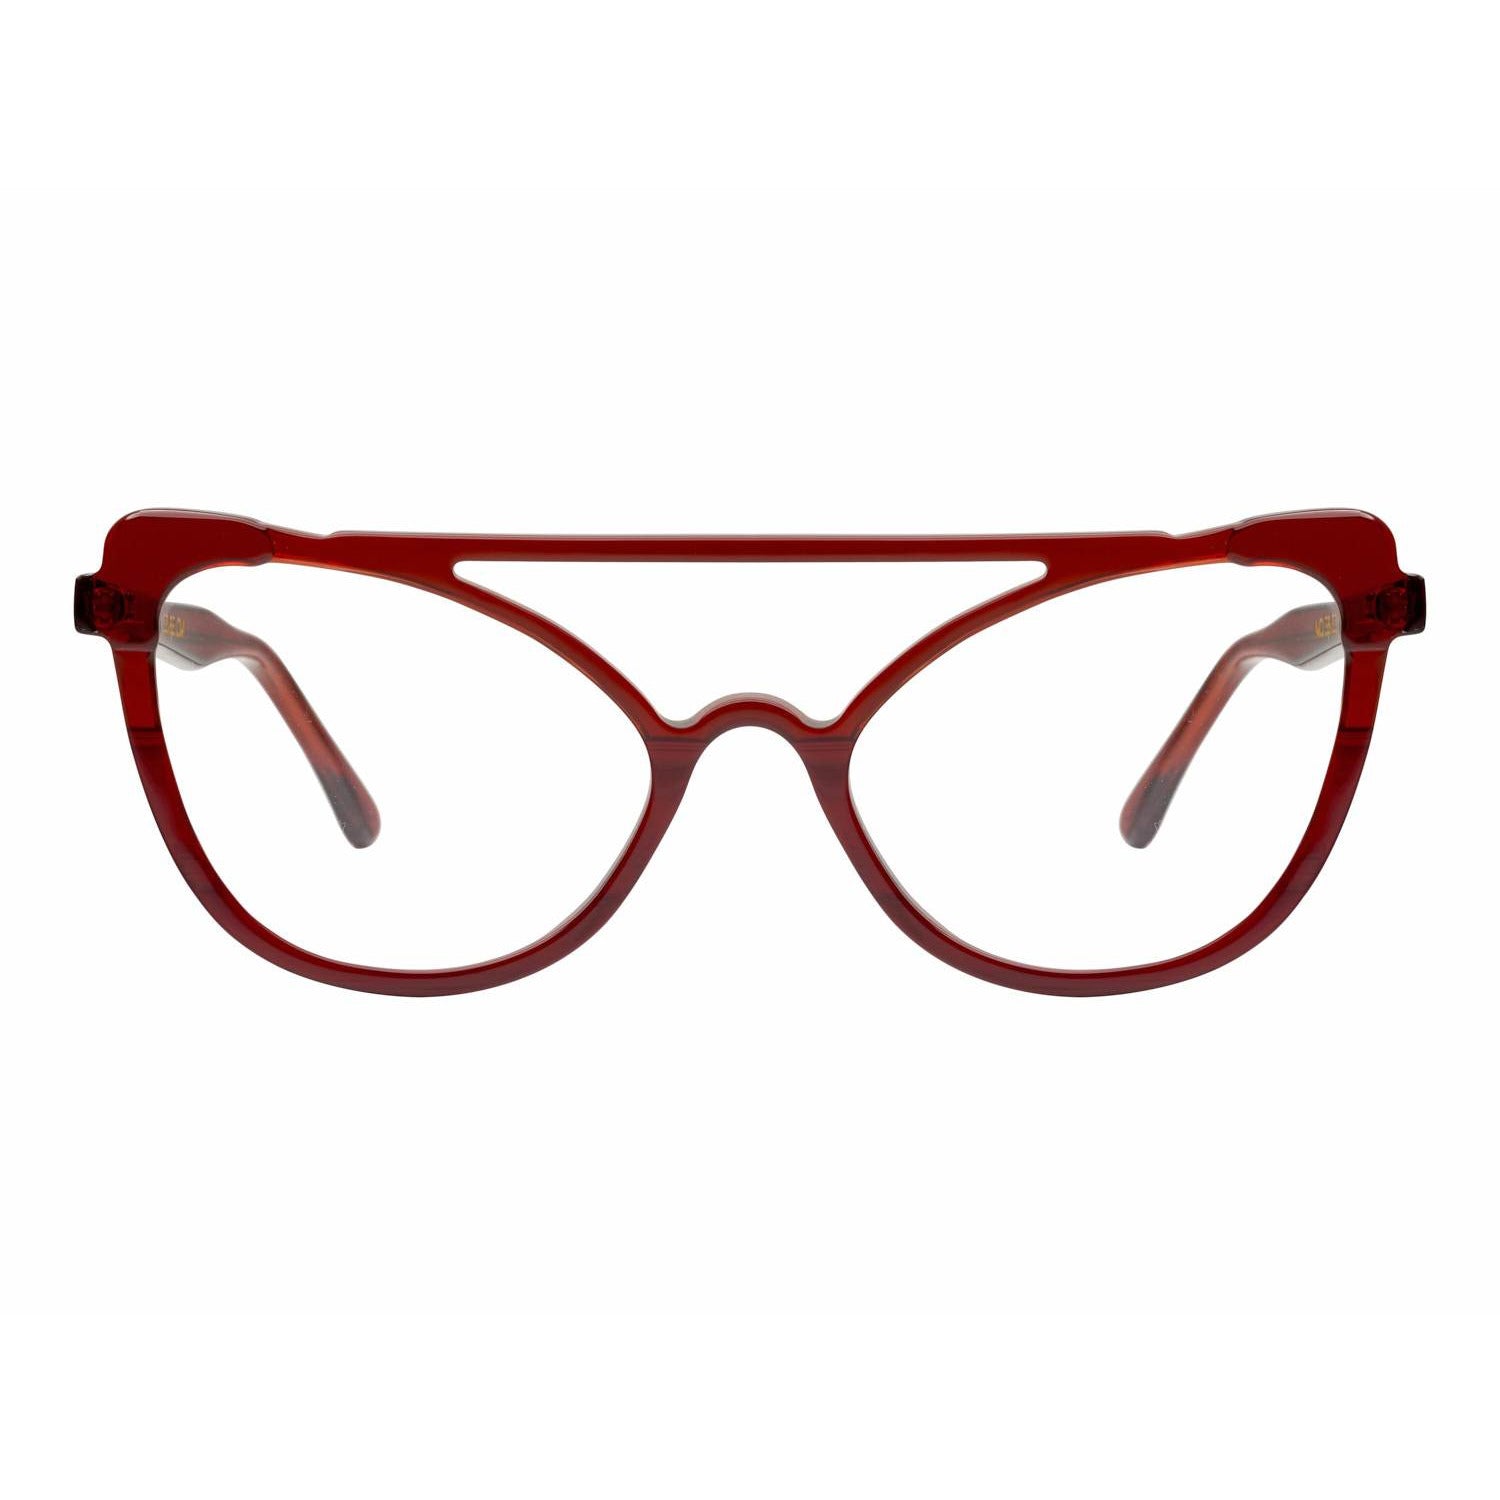 Gattara - Rosso - Cibelle Eyewear